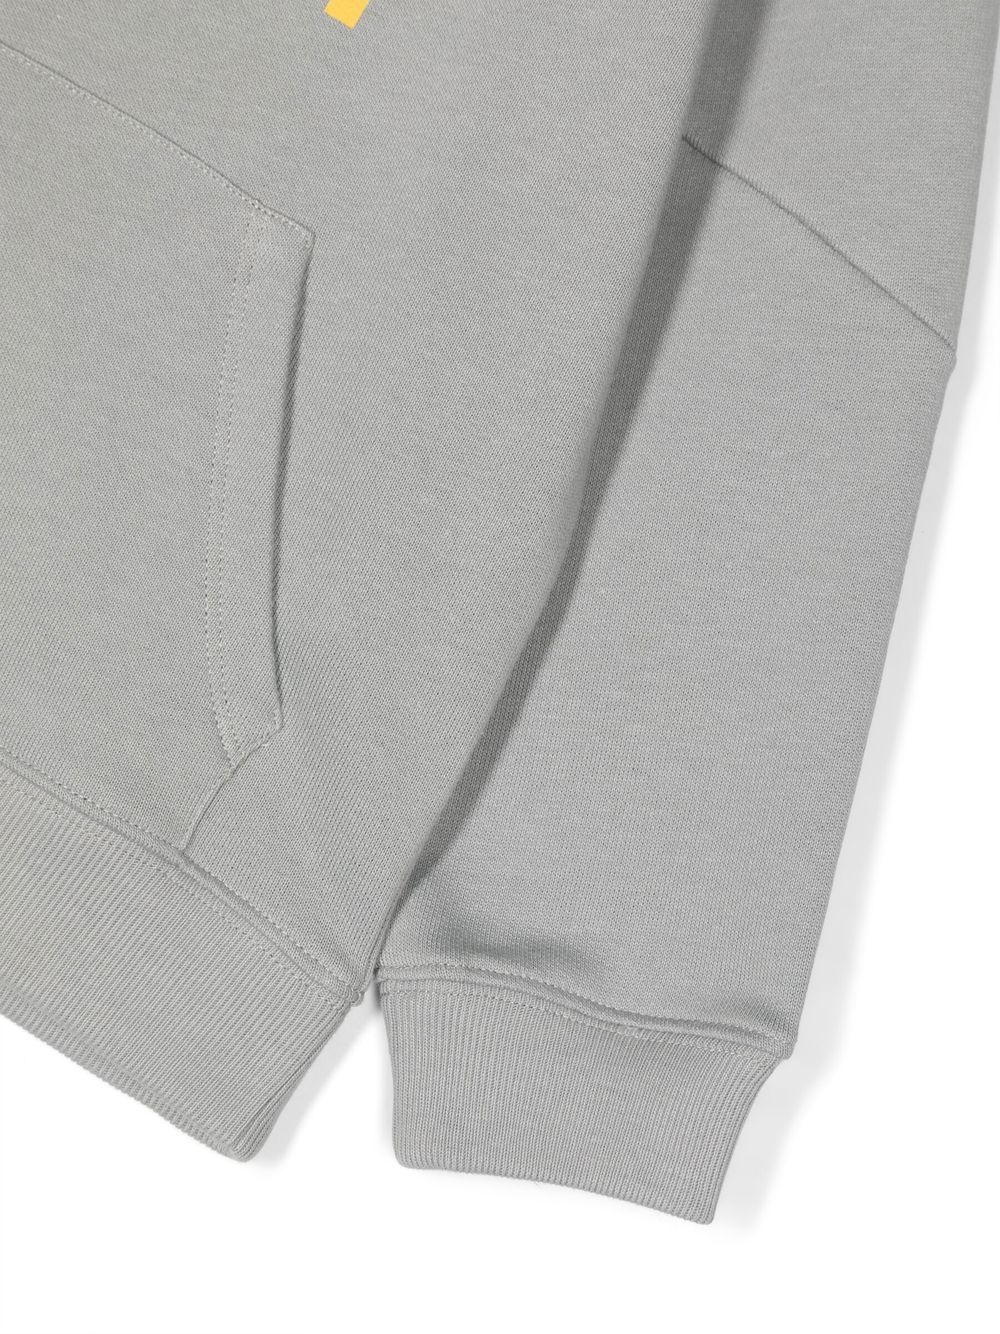 Gray sweatshirt for boys with logo